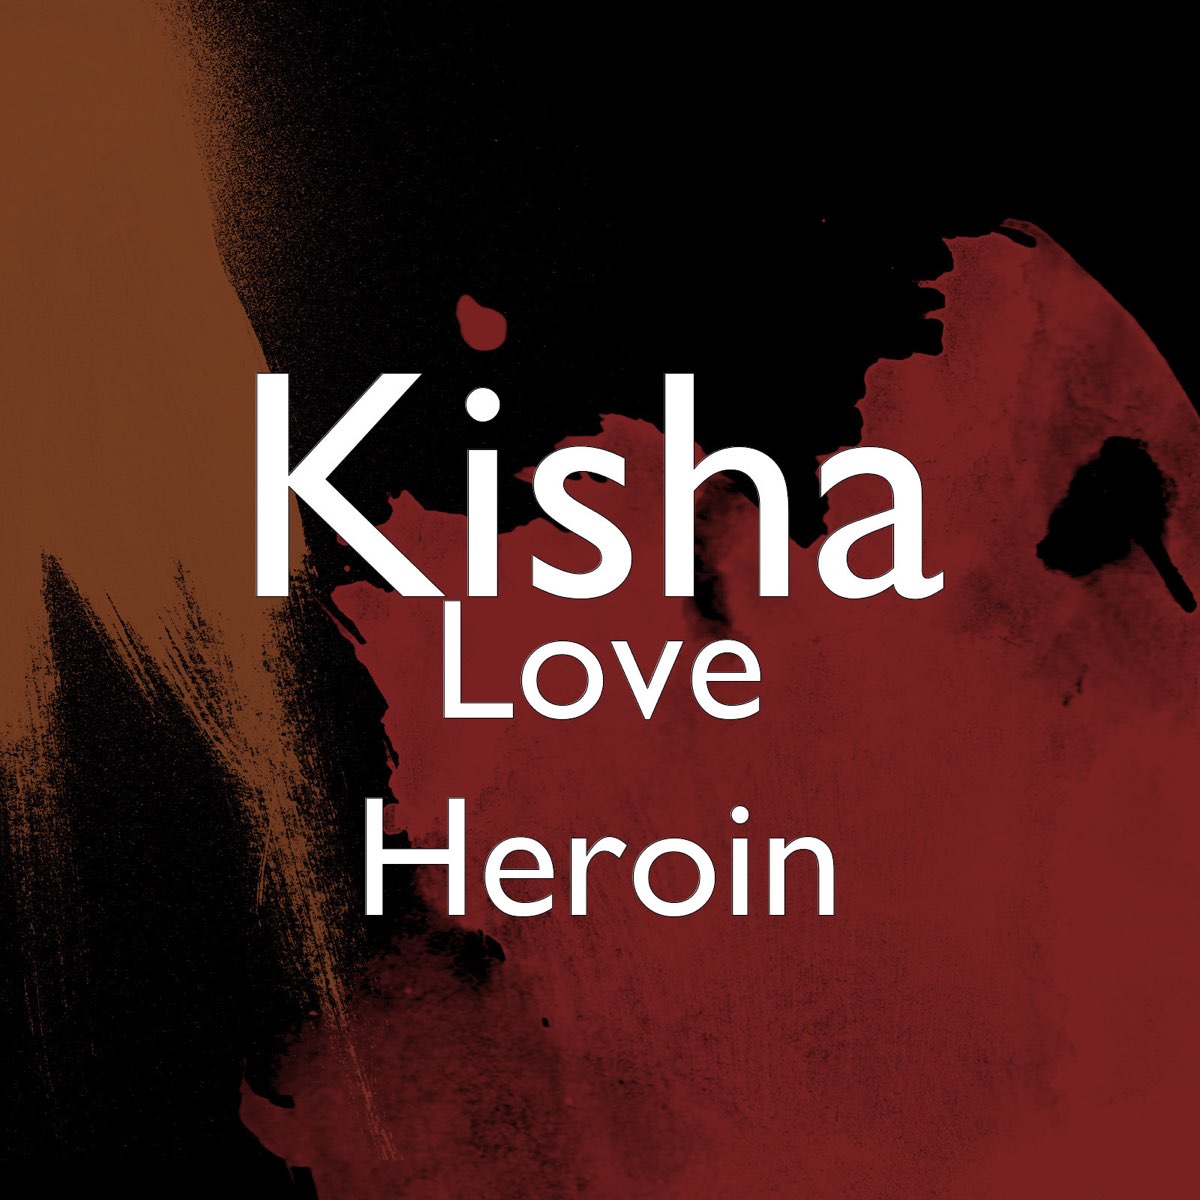 I Love heroin. I Love heroin аватарка. Heroin my Love. Heroine feat toza